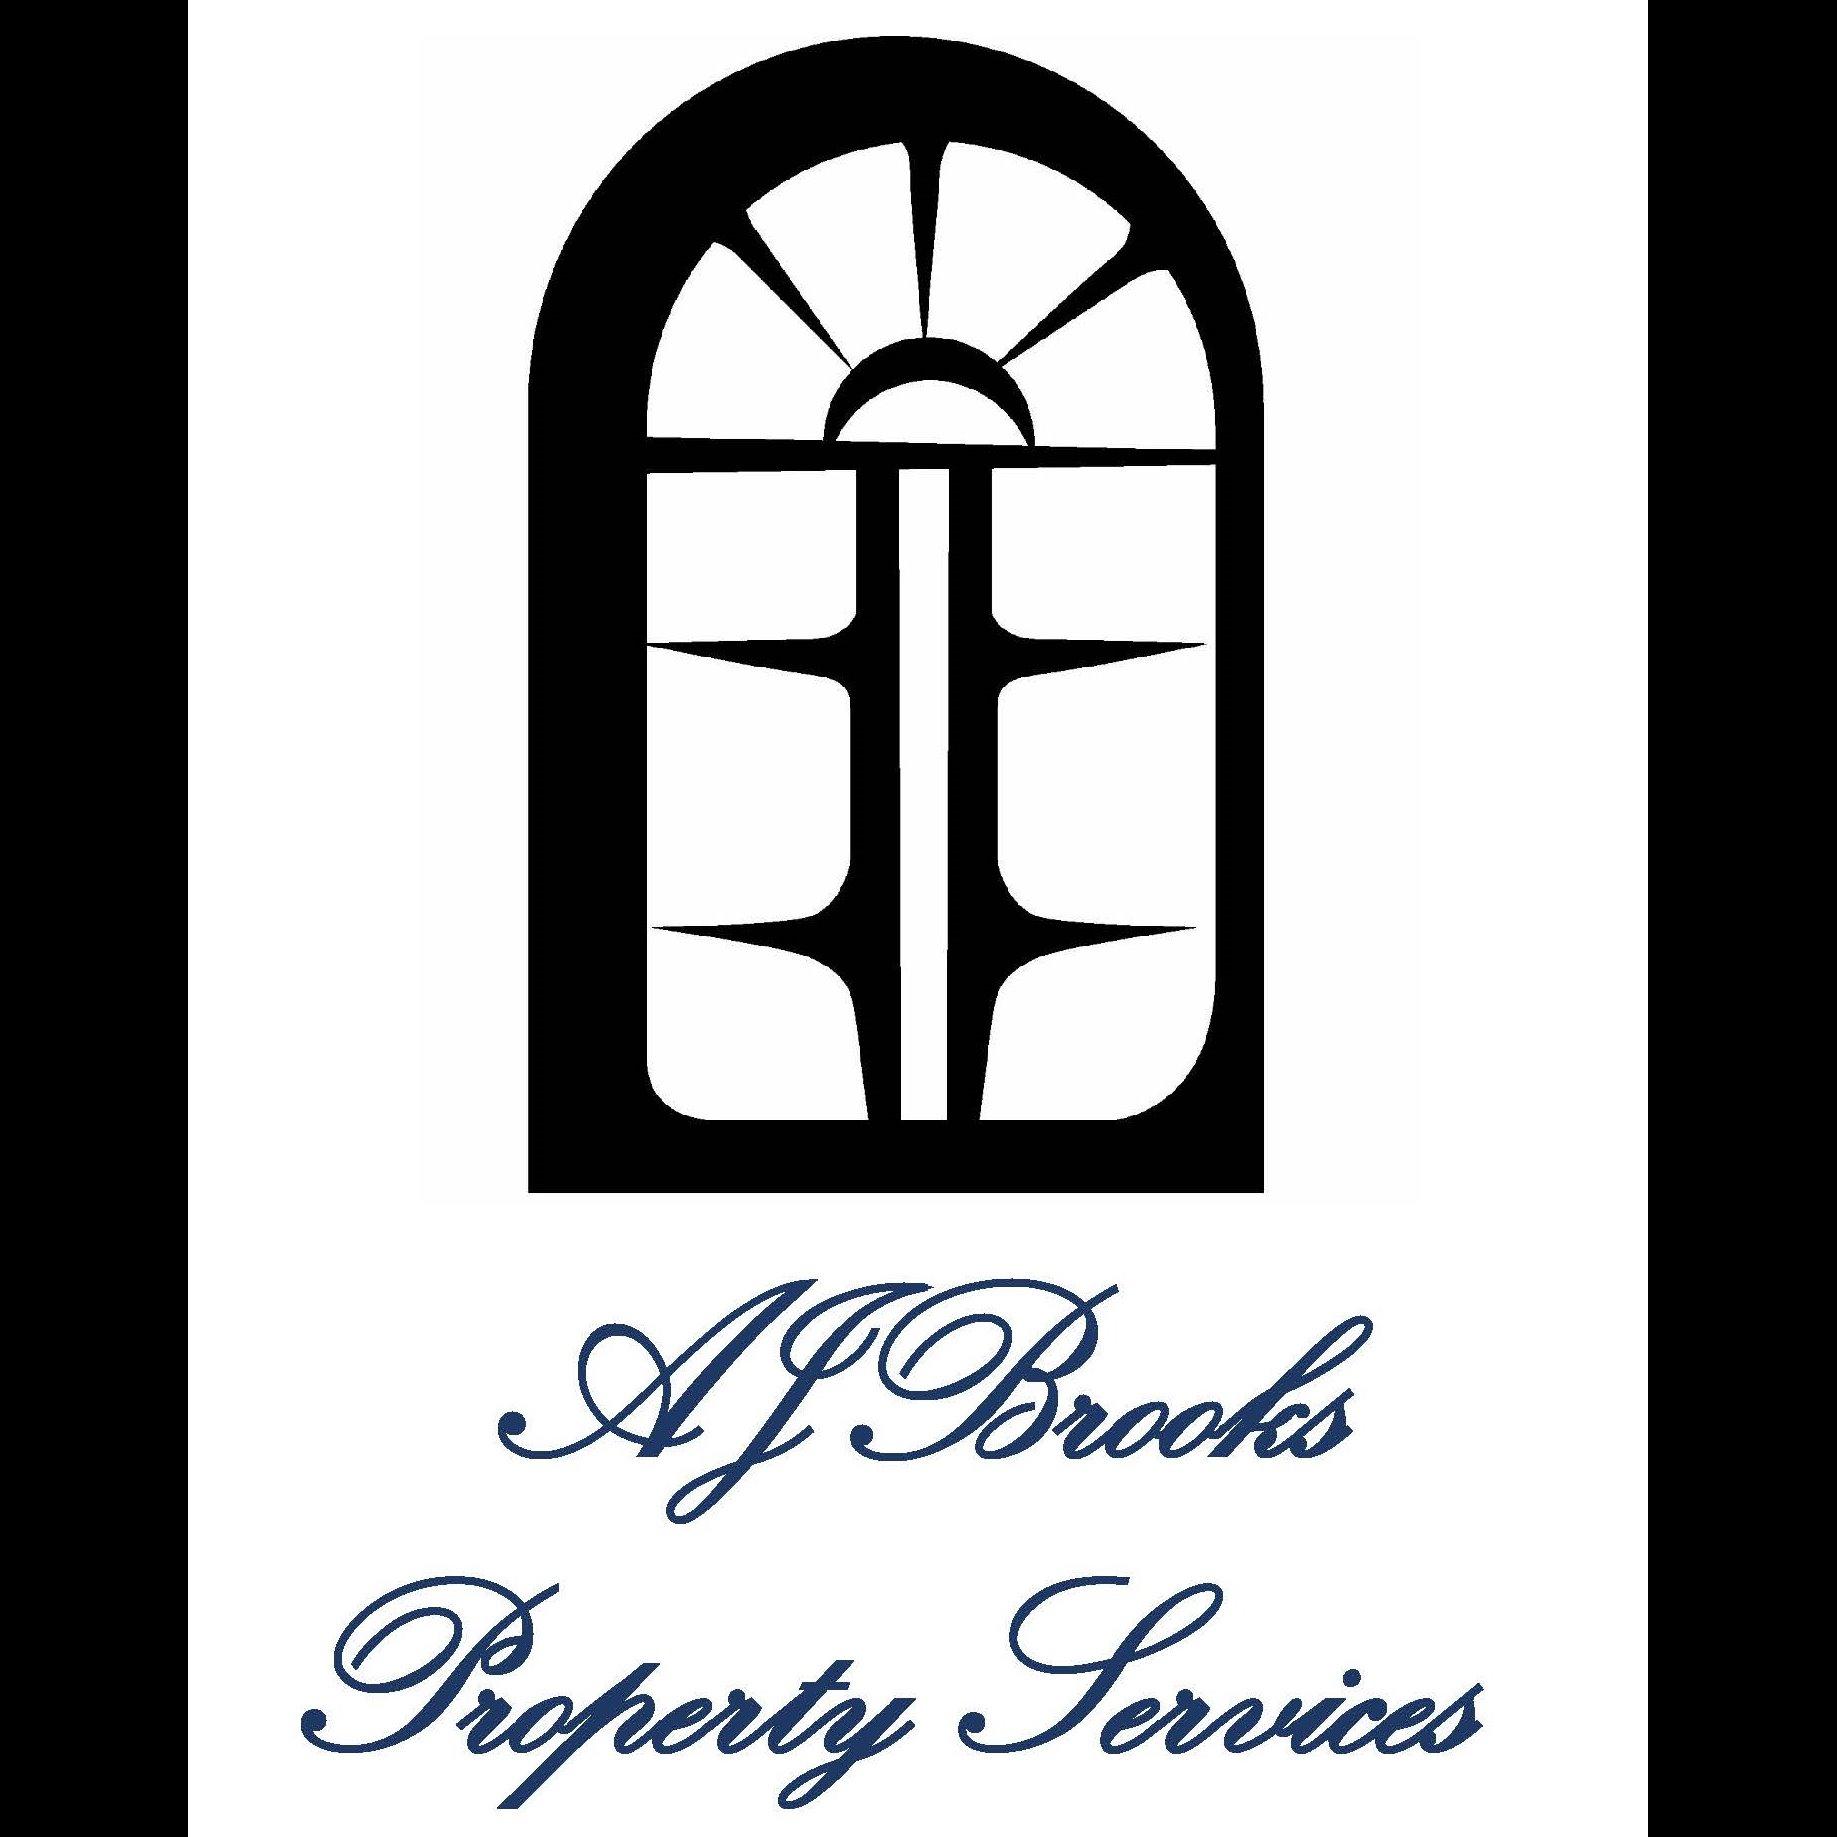 AJBrooks Property Services LLC